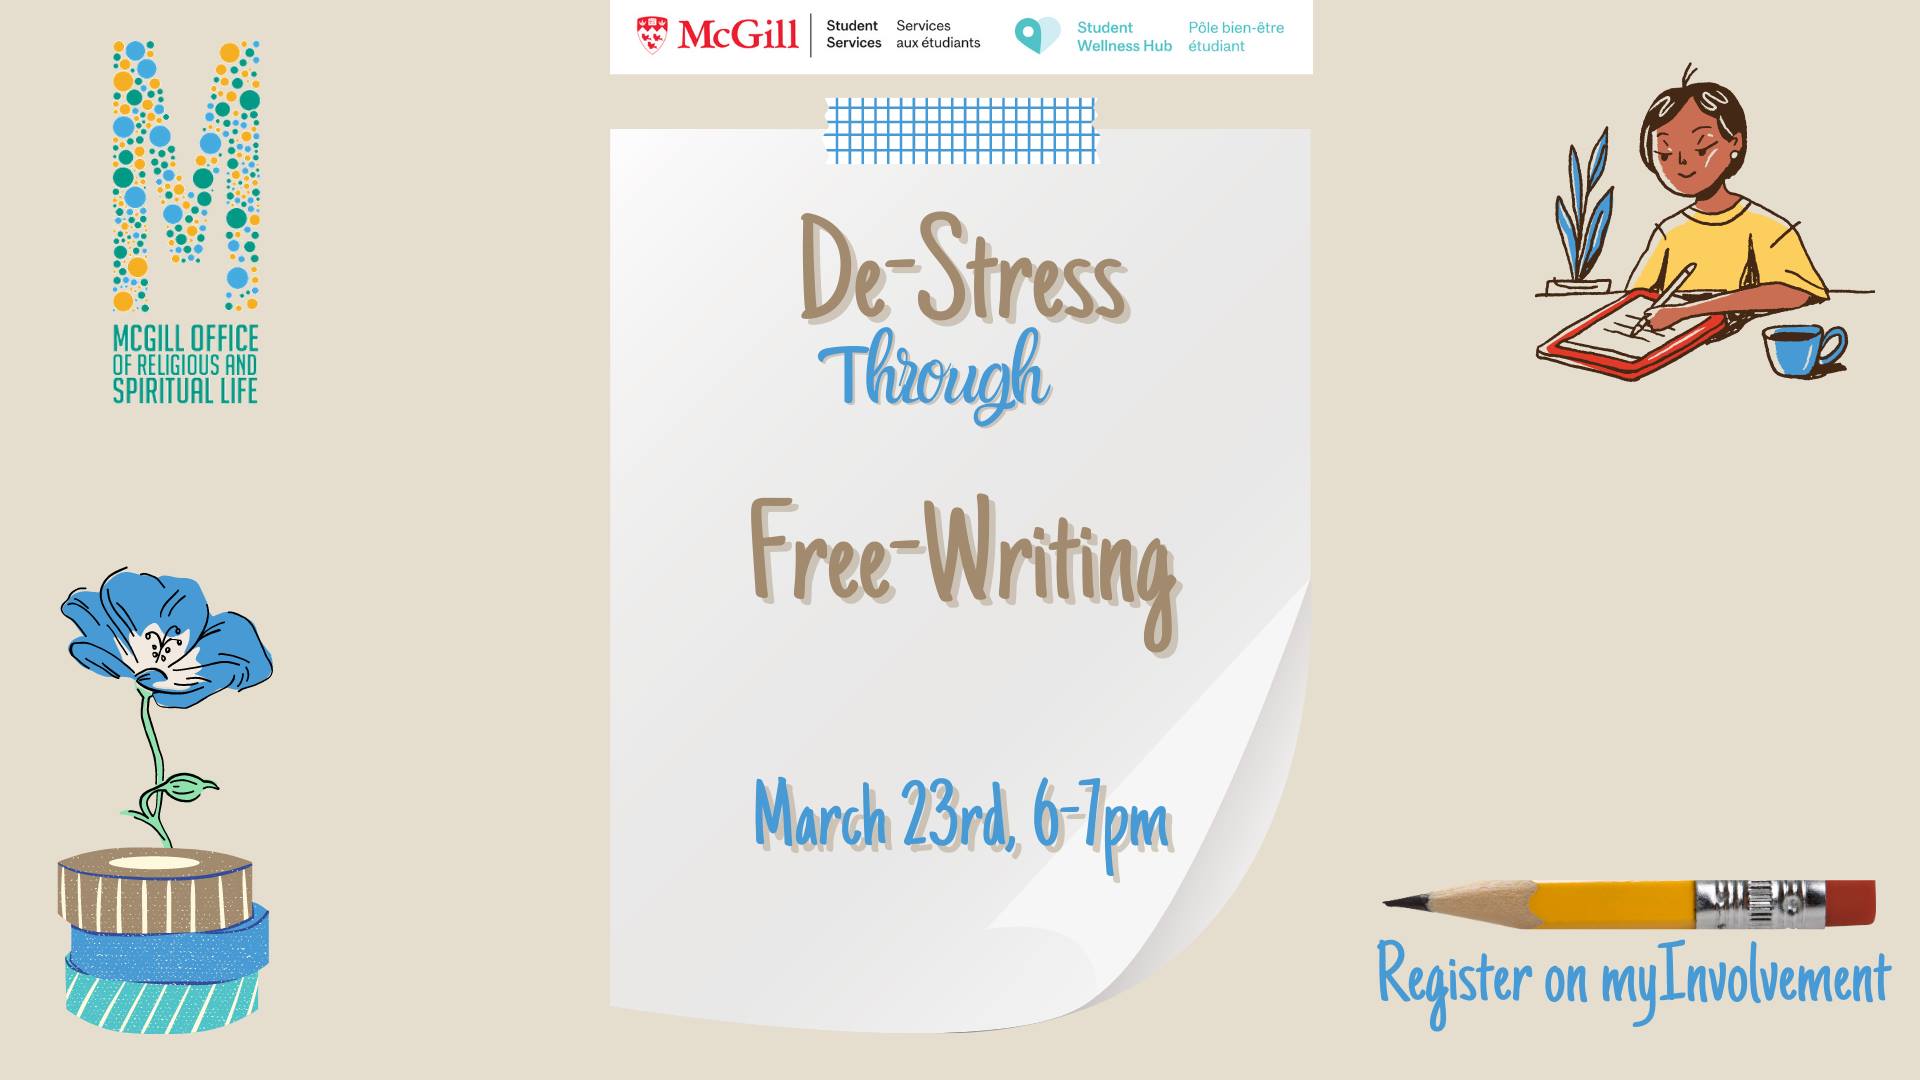 De-Stress through Free-Writing